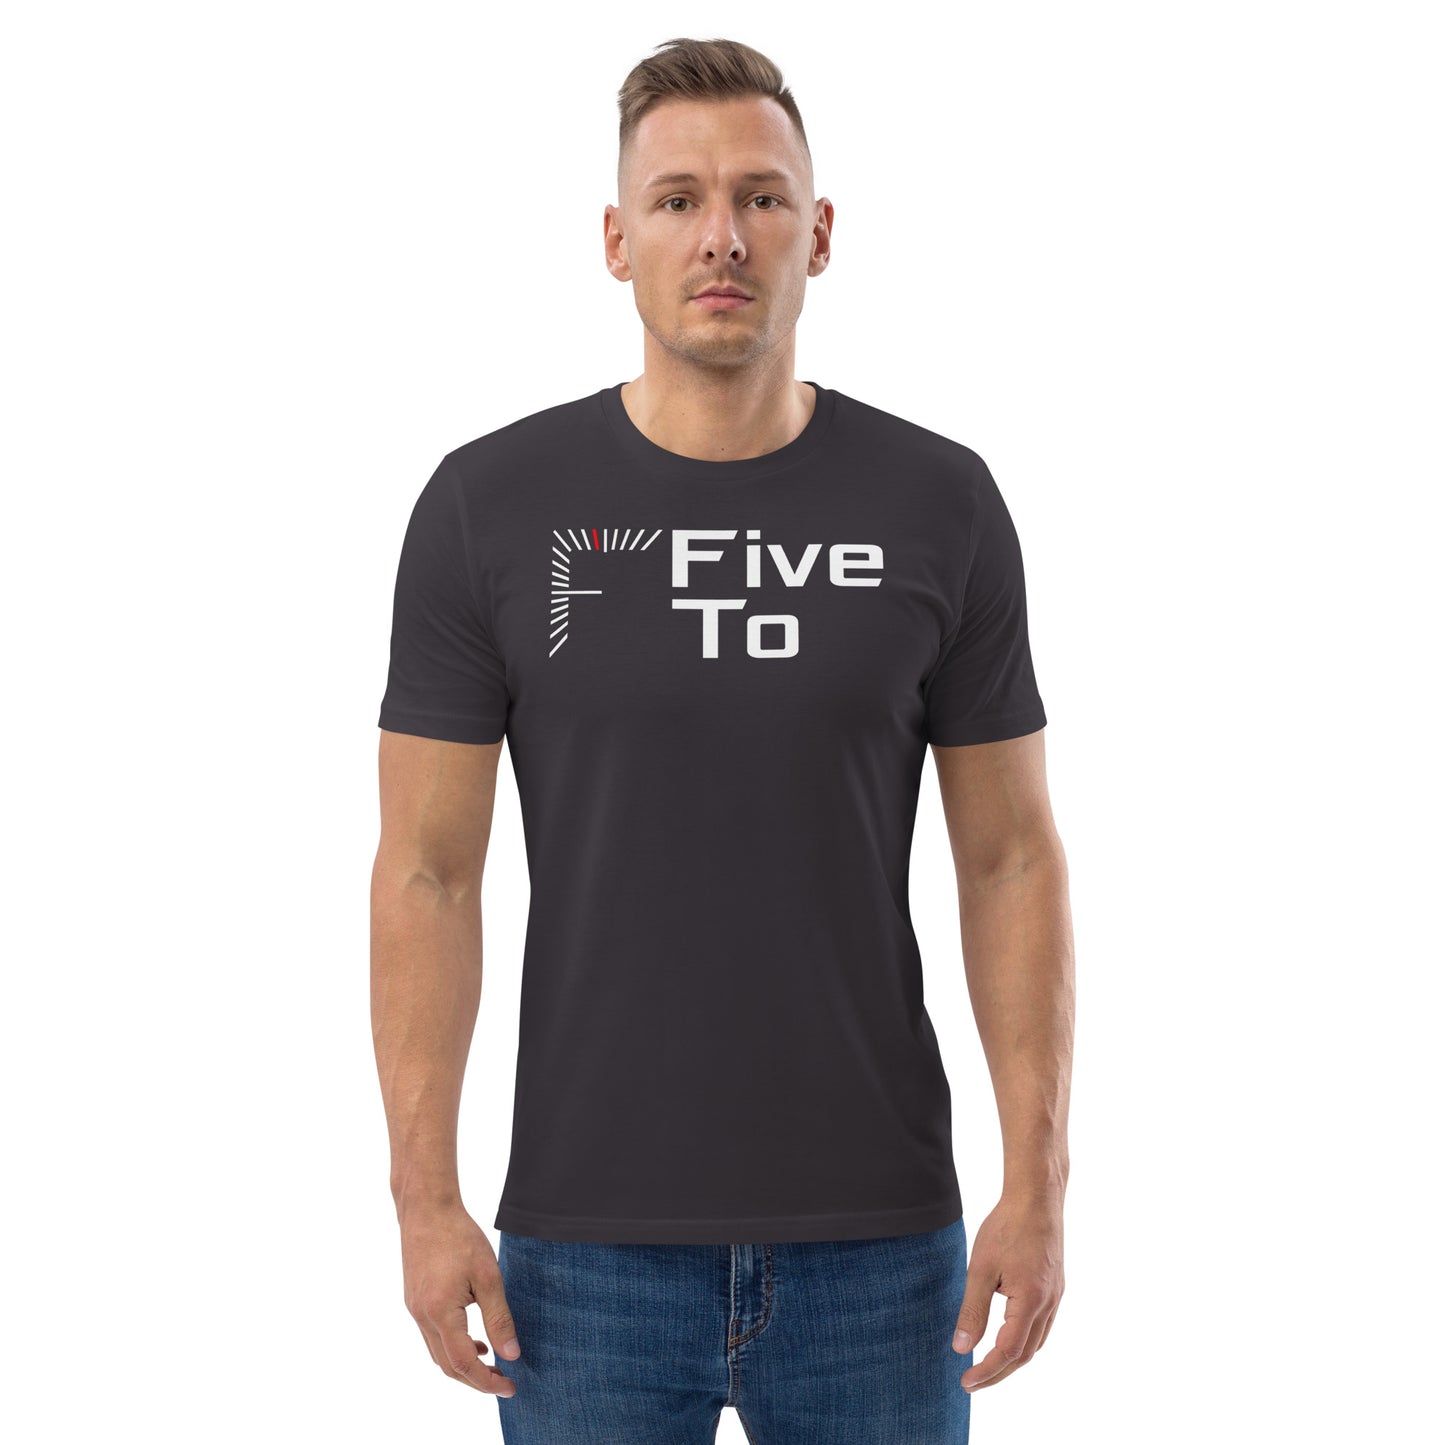 FiveTo Unisex T-shirt Anthracite